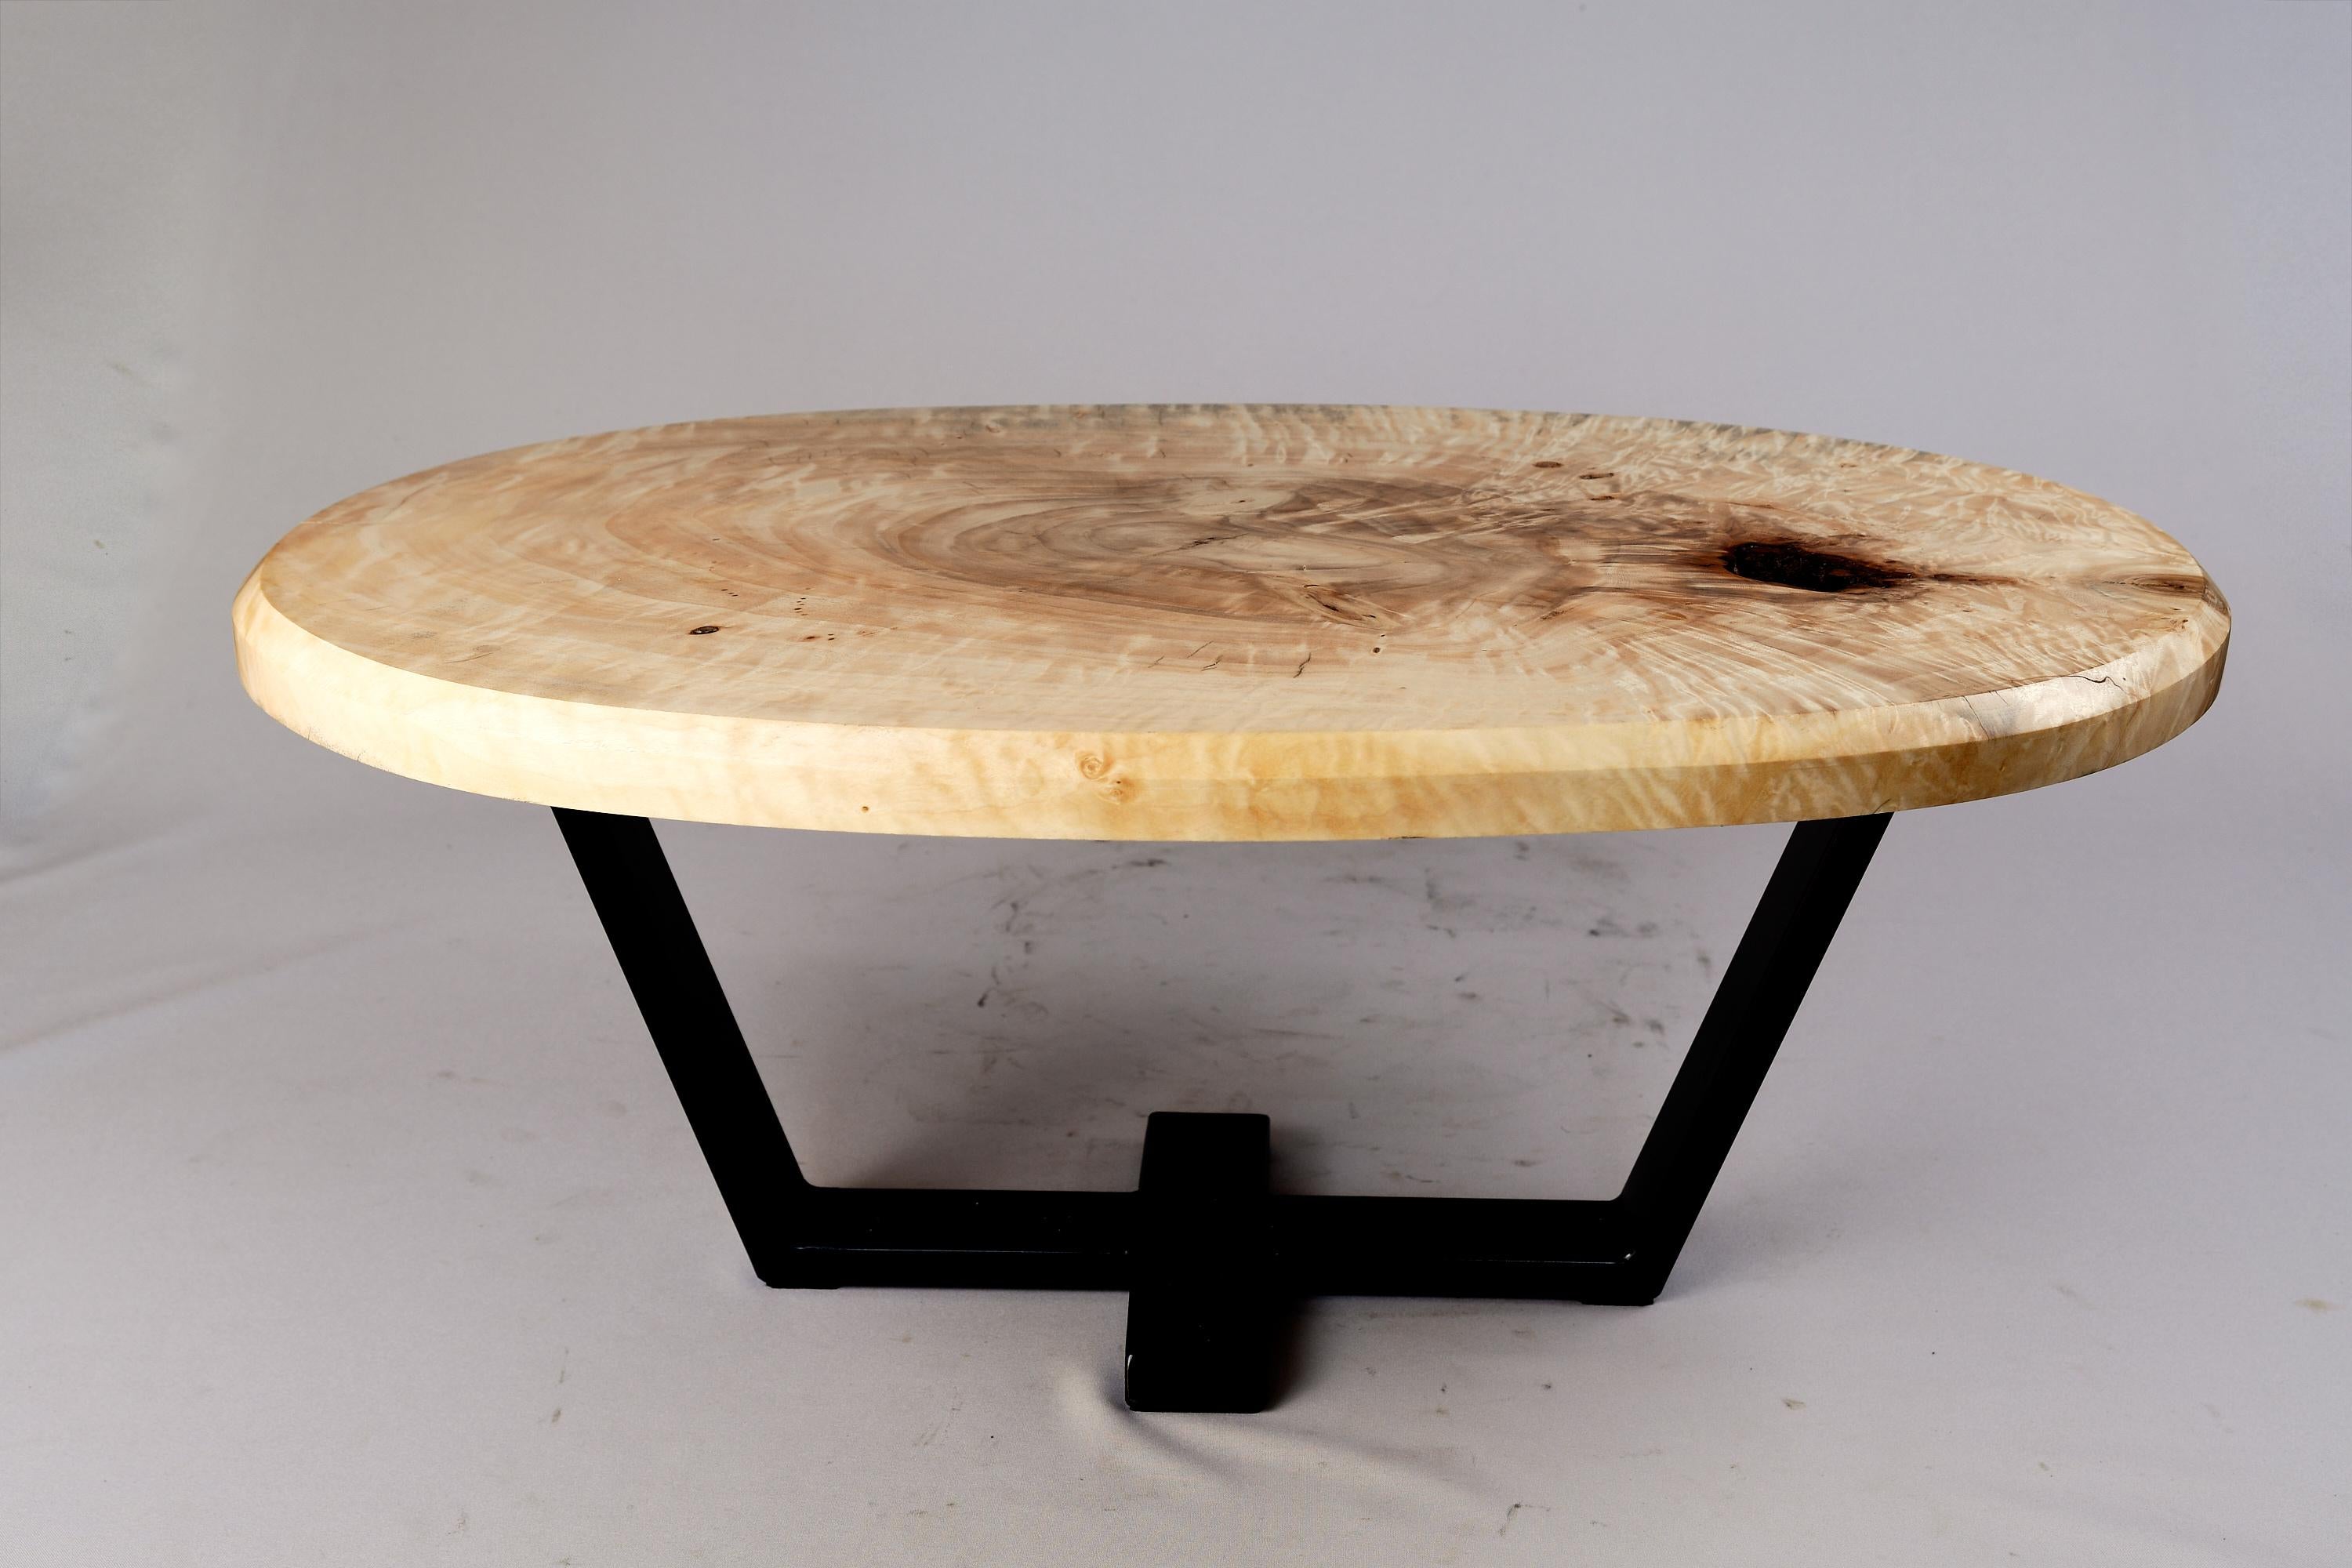 Croatian Original Contemporary Design, Burnt Oak with Steel, Unique Side Table, Logniture For Sale